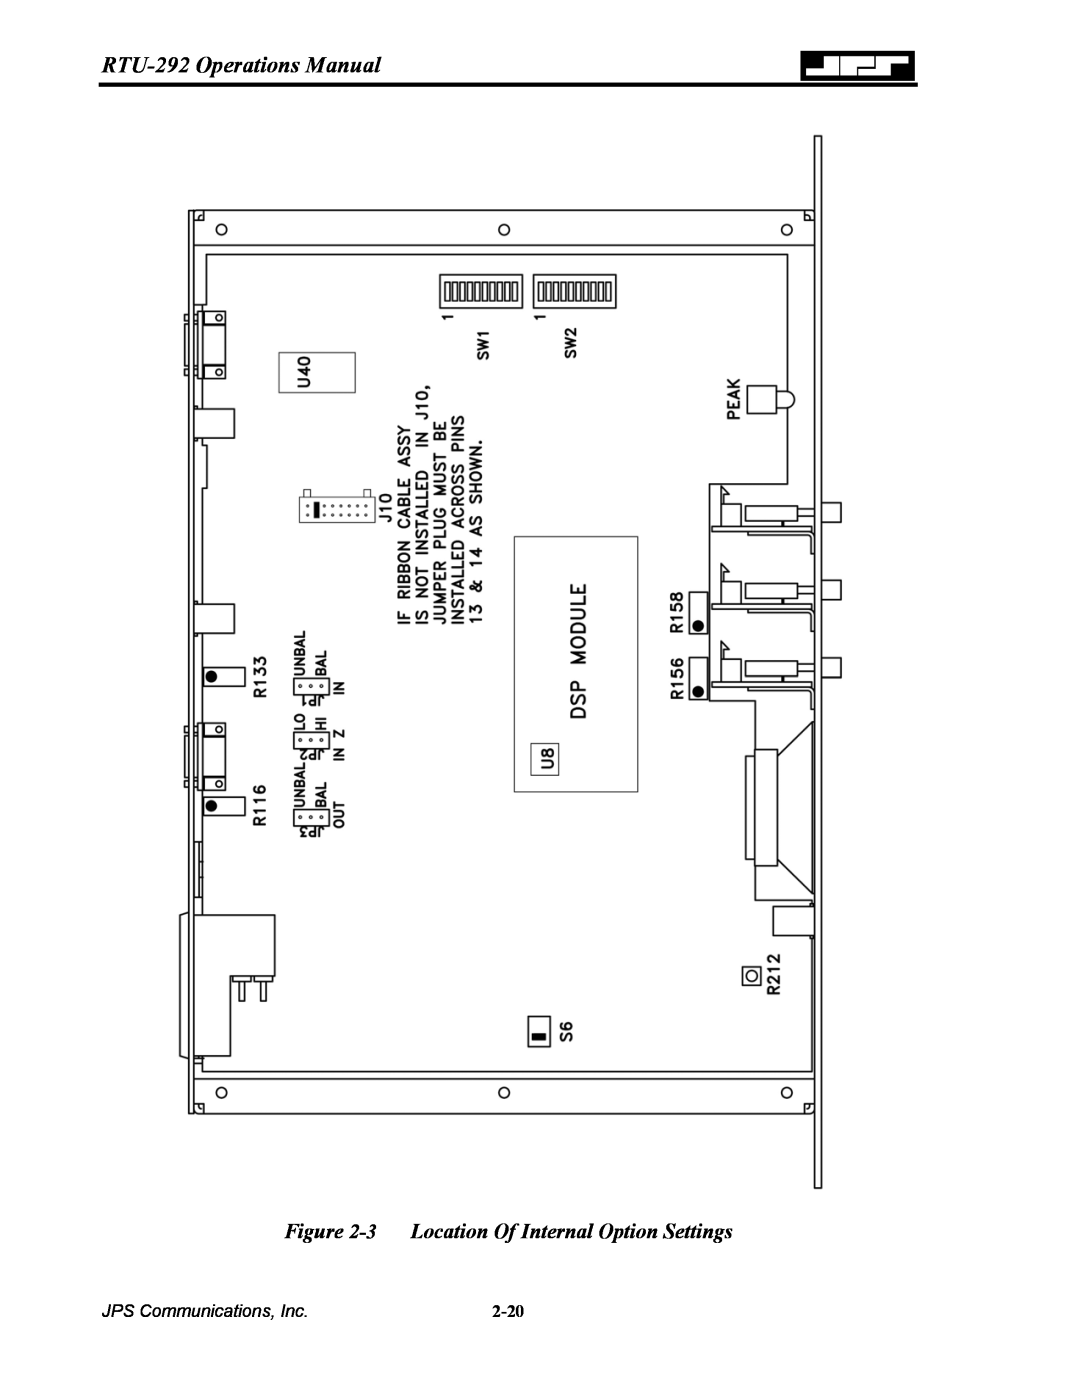 Nortel Networks RTU-292 Operations Manual, 3 Location Of Internal Option Settings, JPS Communications, Inc, 2-20 